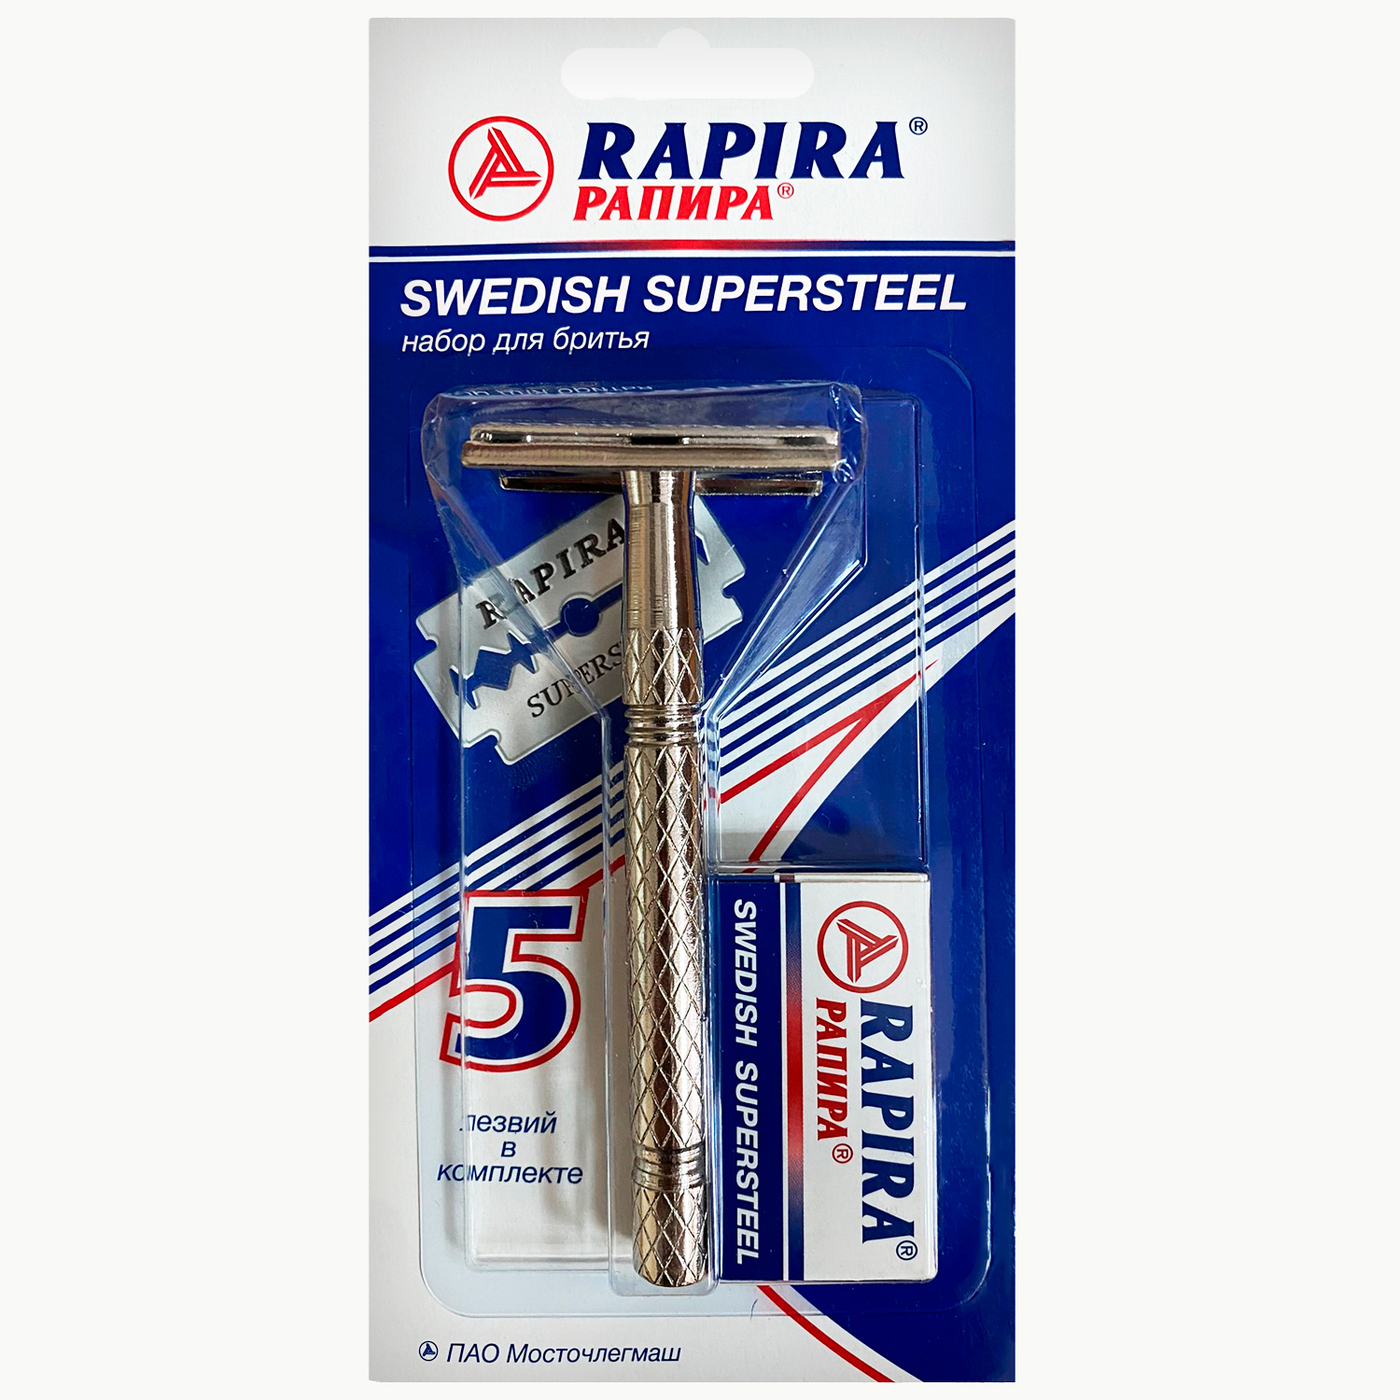    / Rapira Swedish Supersteel -     5  